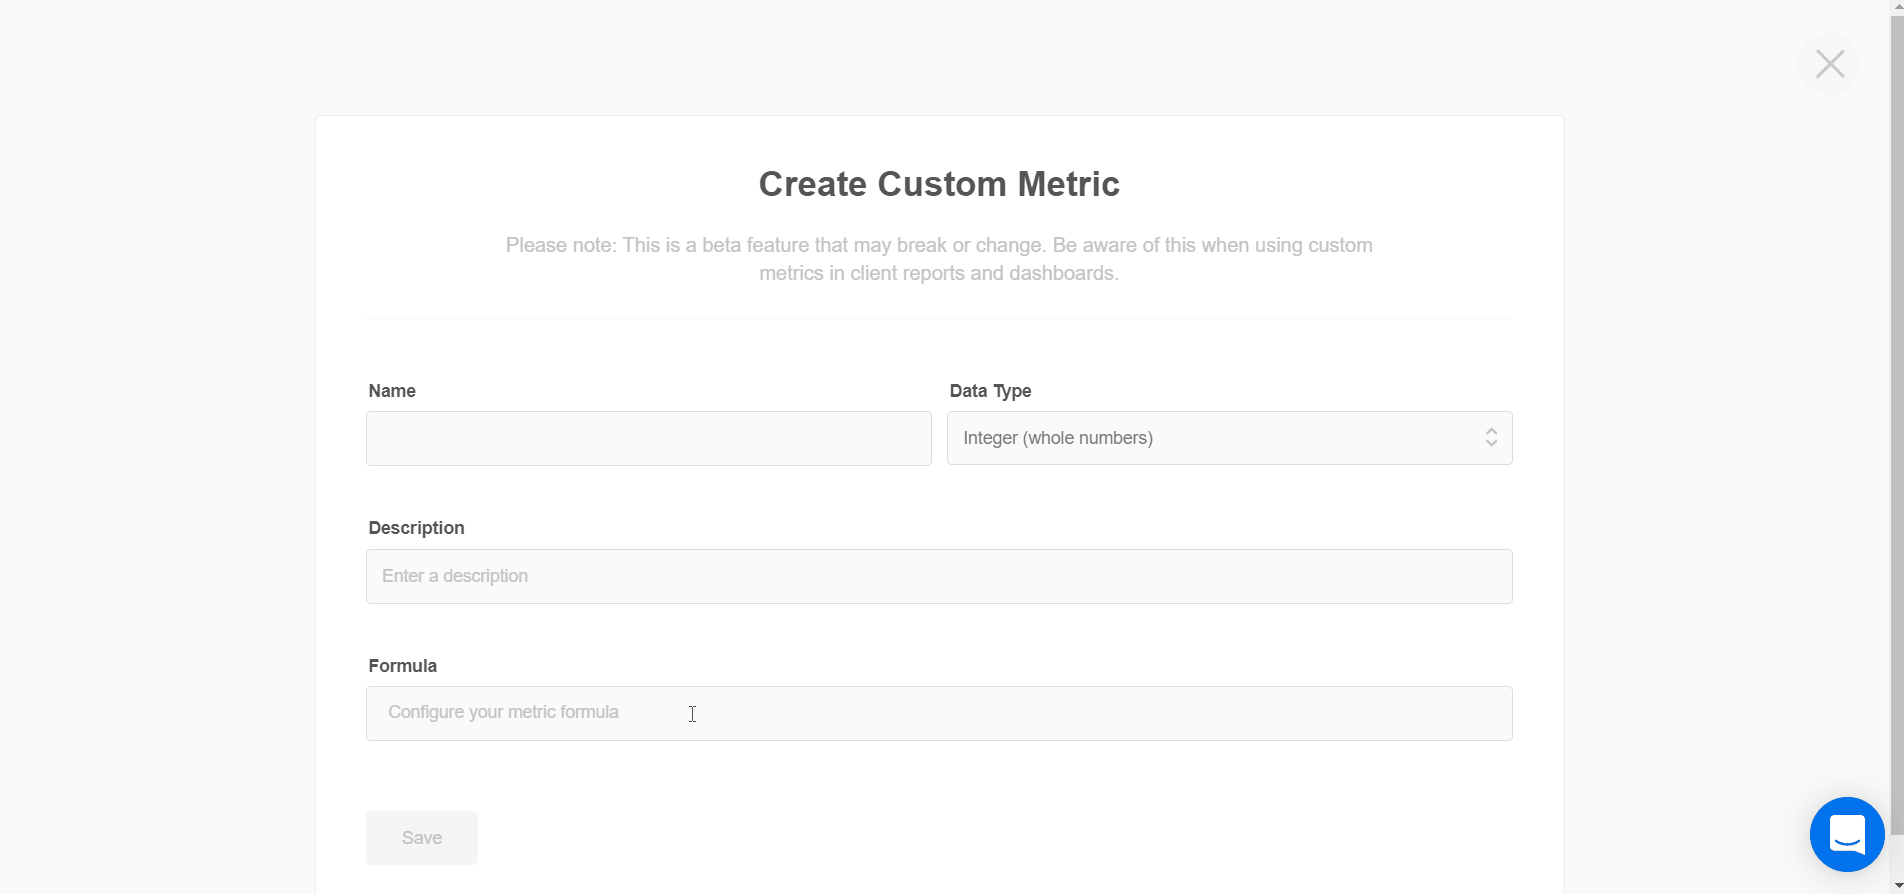 Create custom metrics instructions